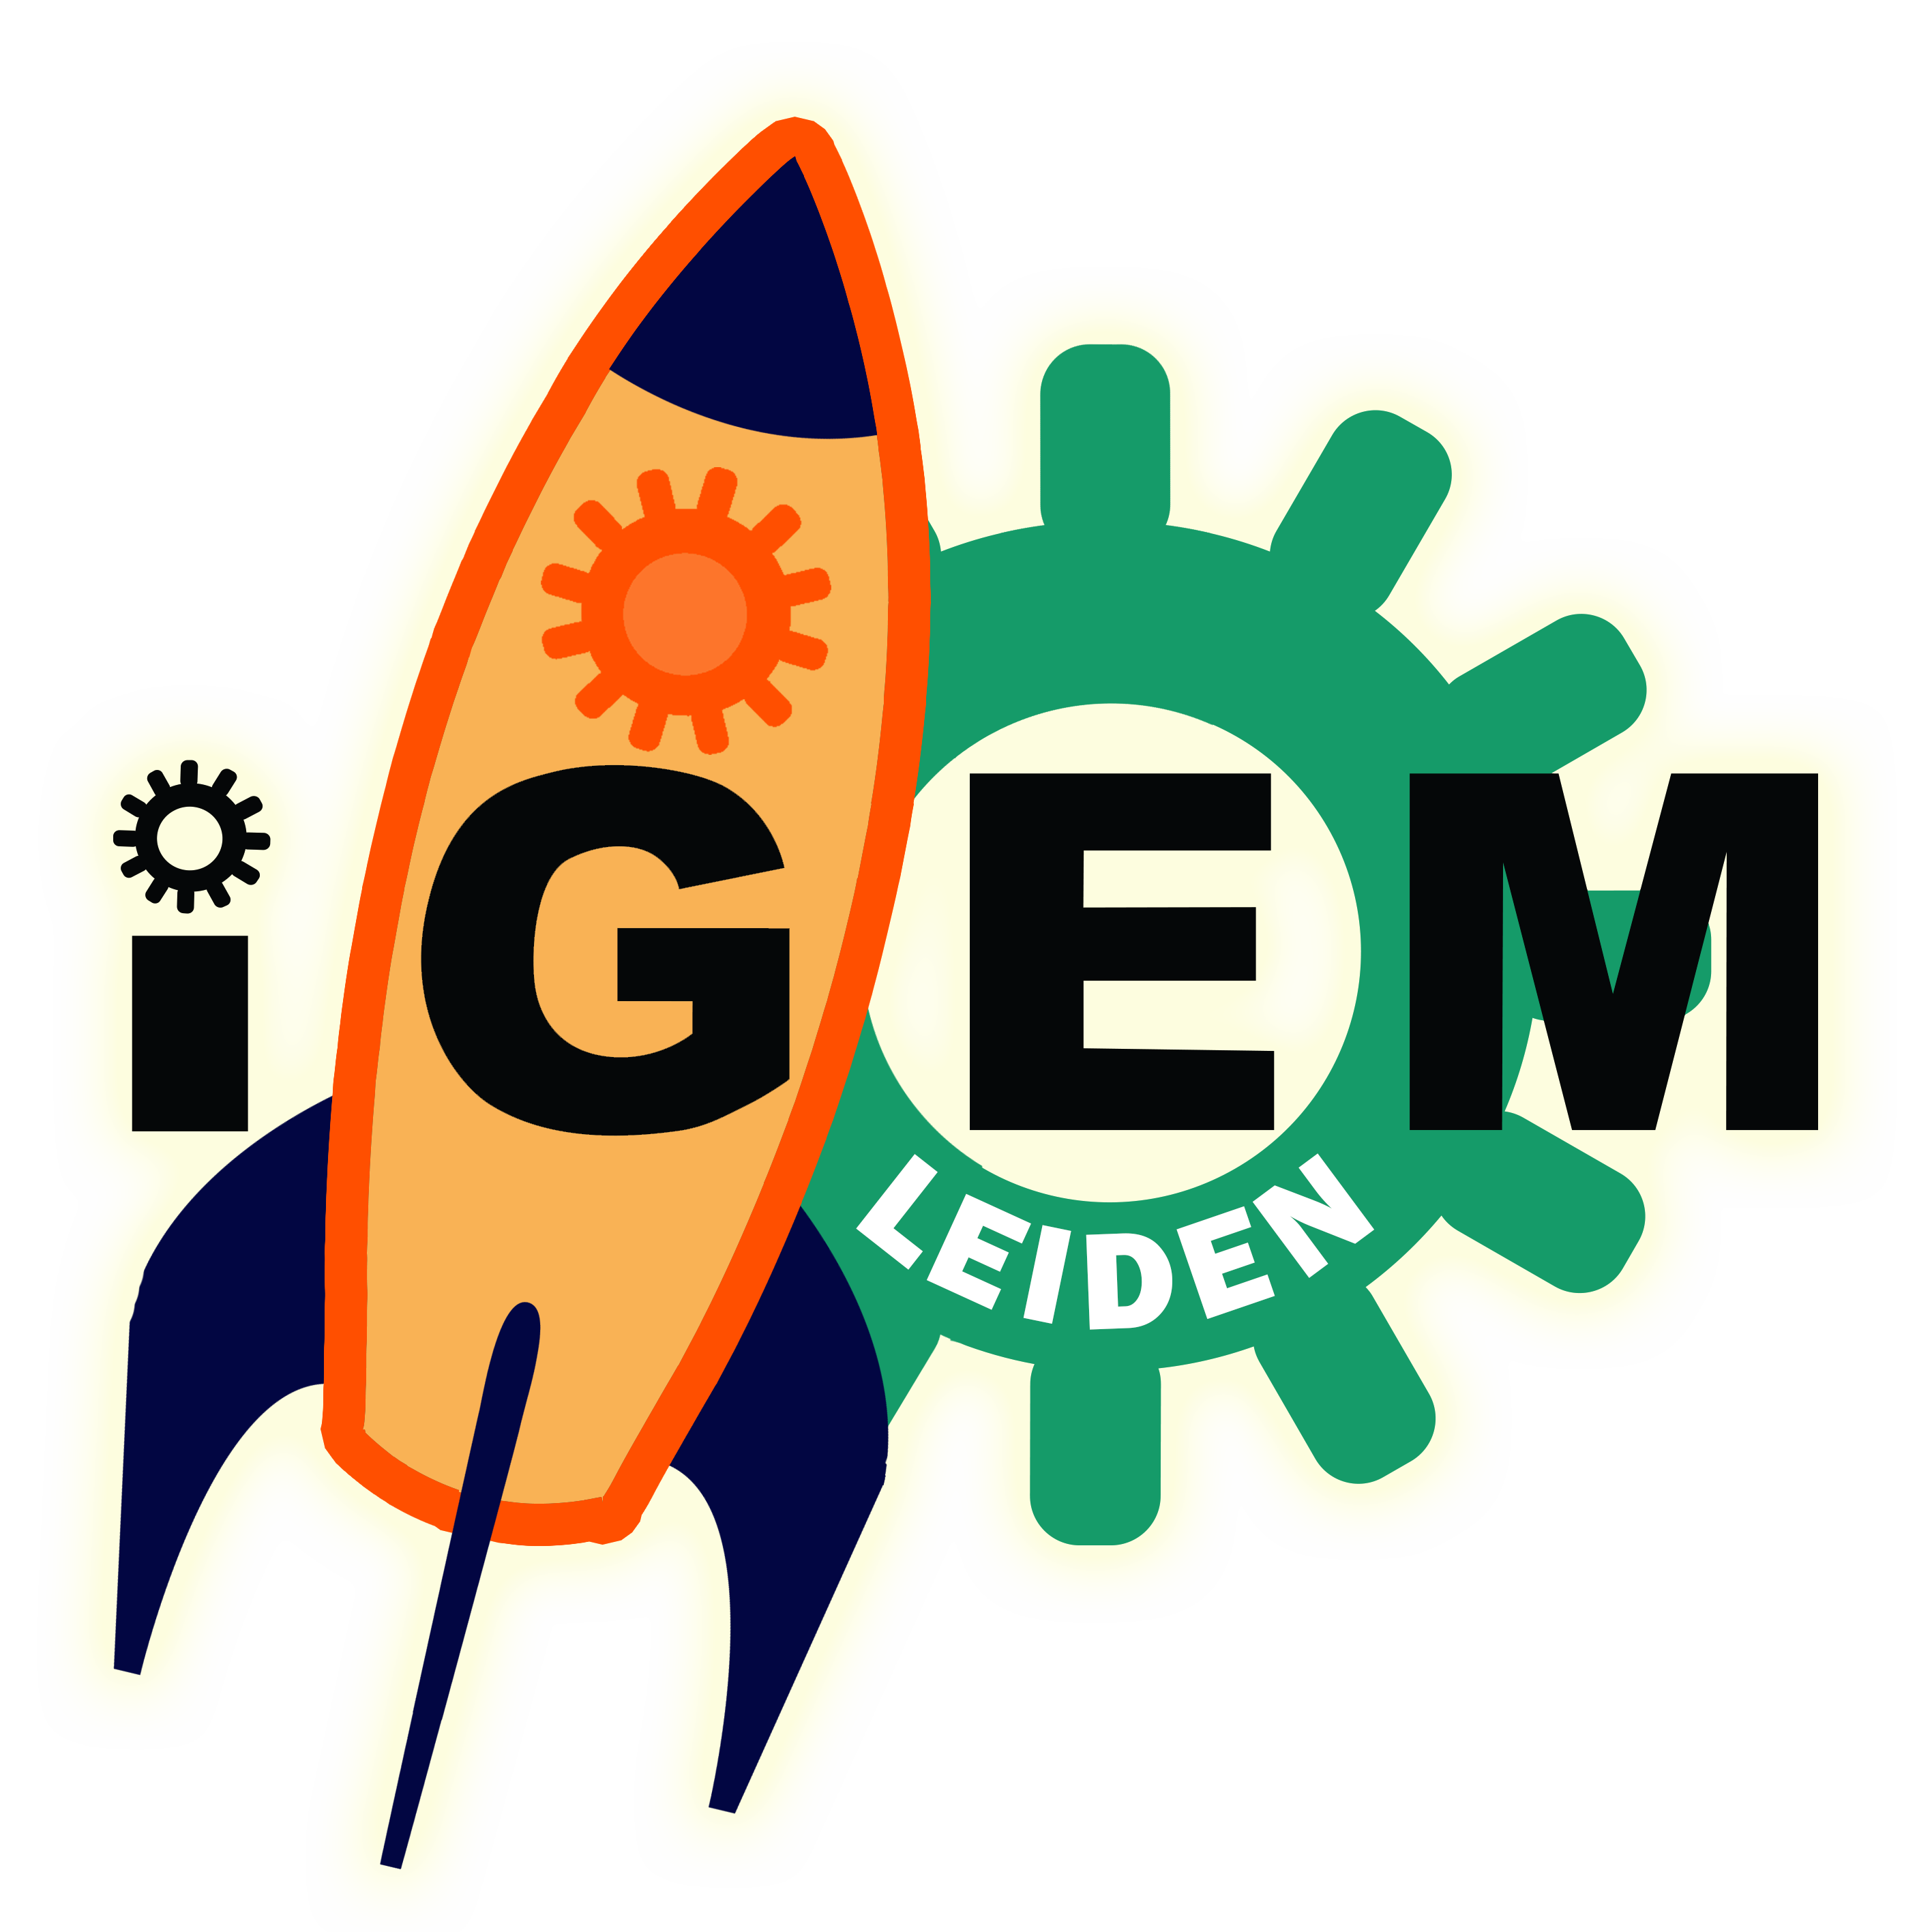 Team-Leiden-images-logo-radiating.png